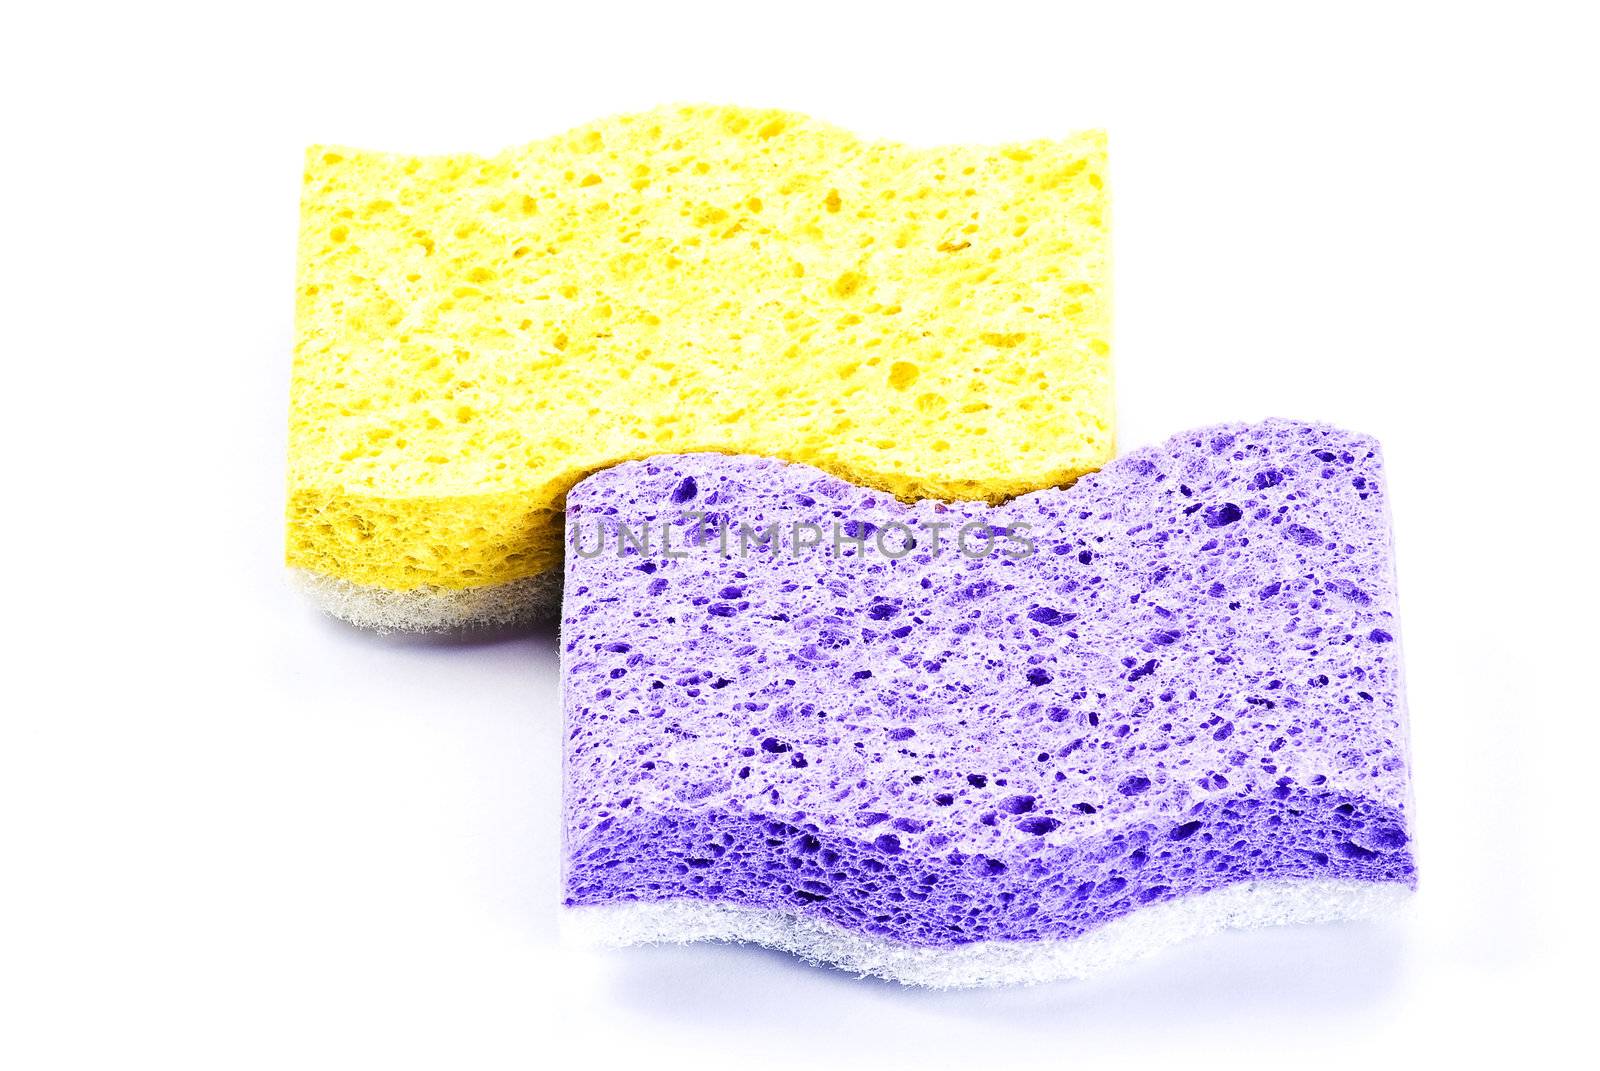 Sponges by caldix